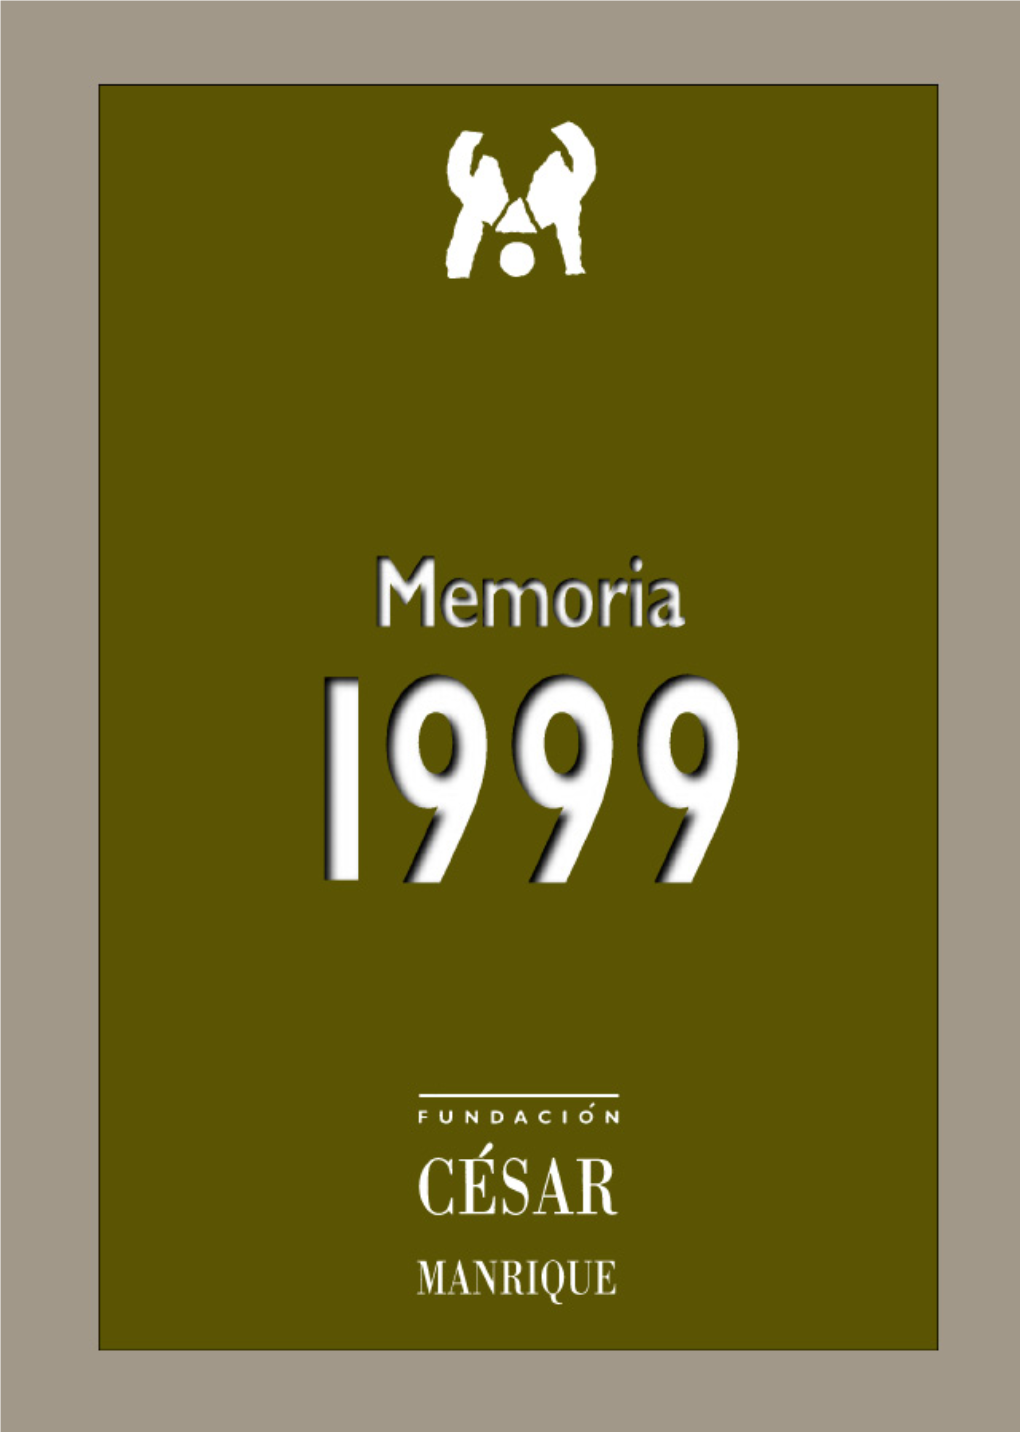 Memoria 1999 © FUNDACIÓN CÉSAR MANRIQUE